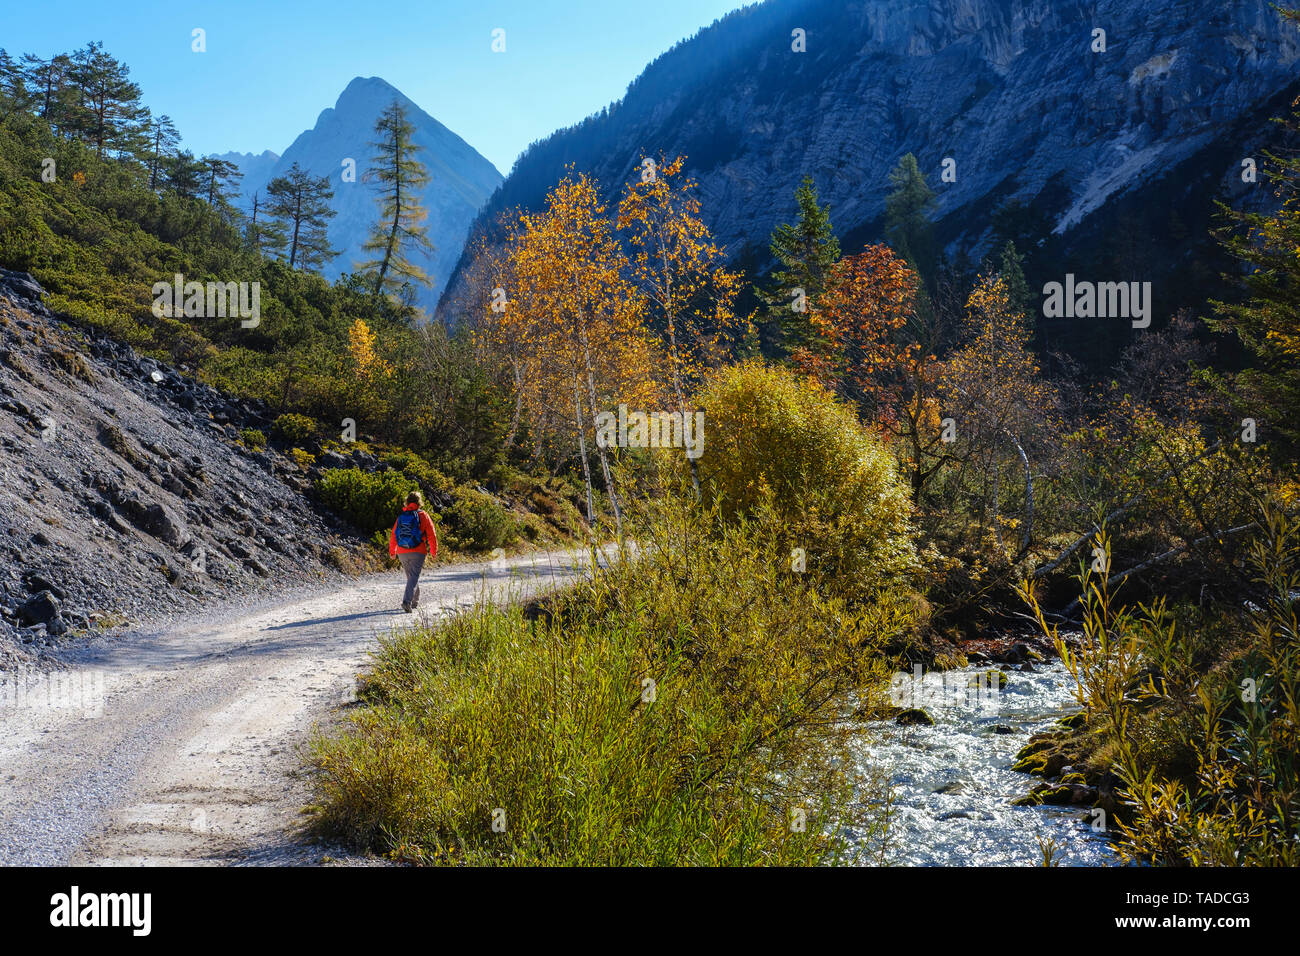 Austria, Tyrol, Karwendel mountains, Hinterautal, woman hiking along River Isar Stock Photo